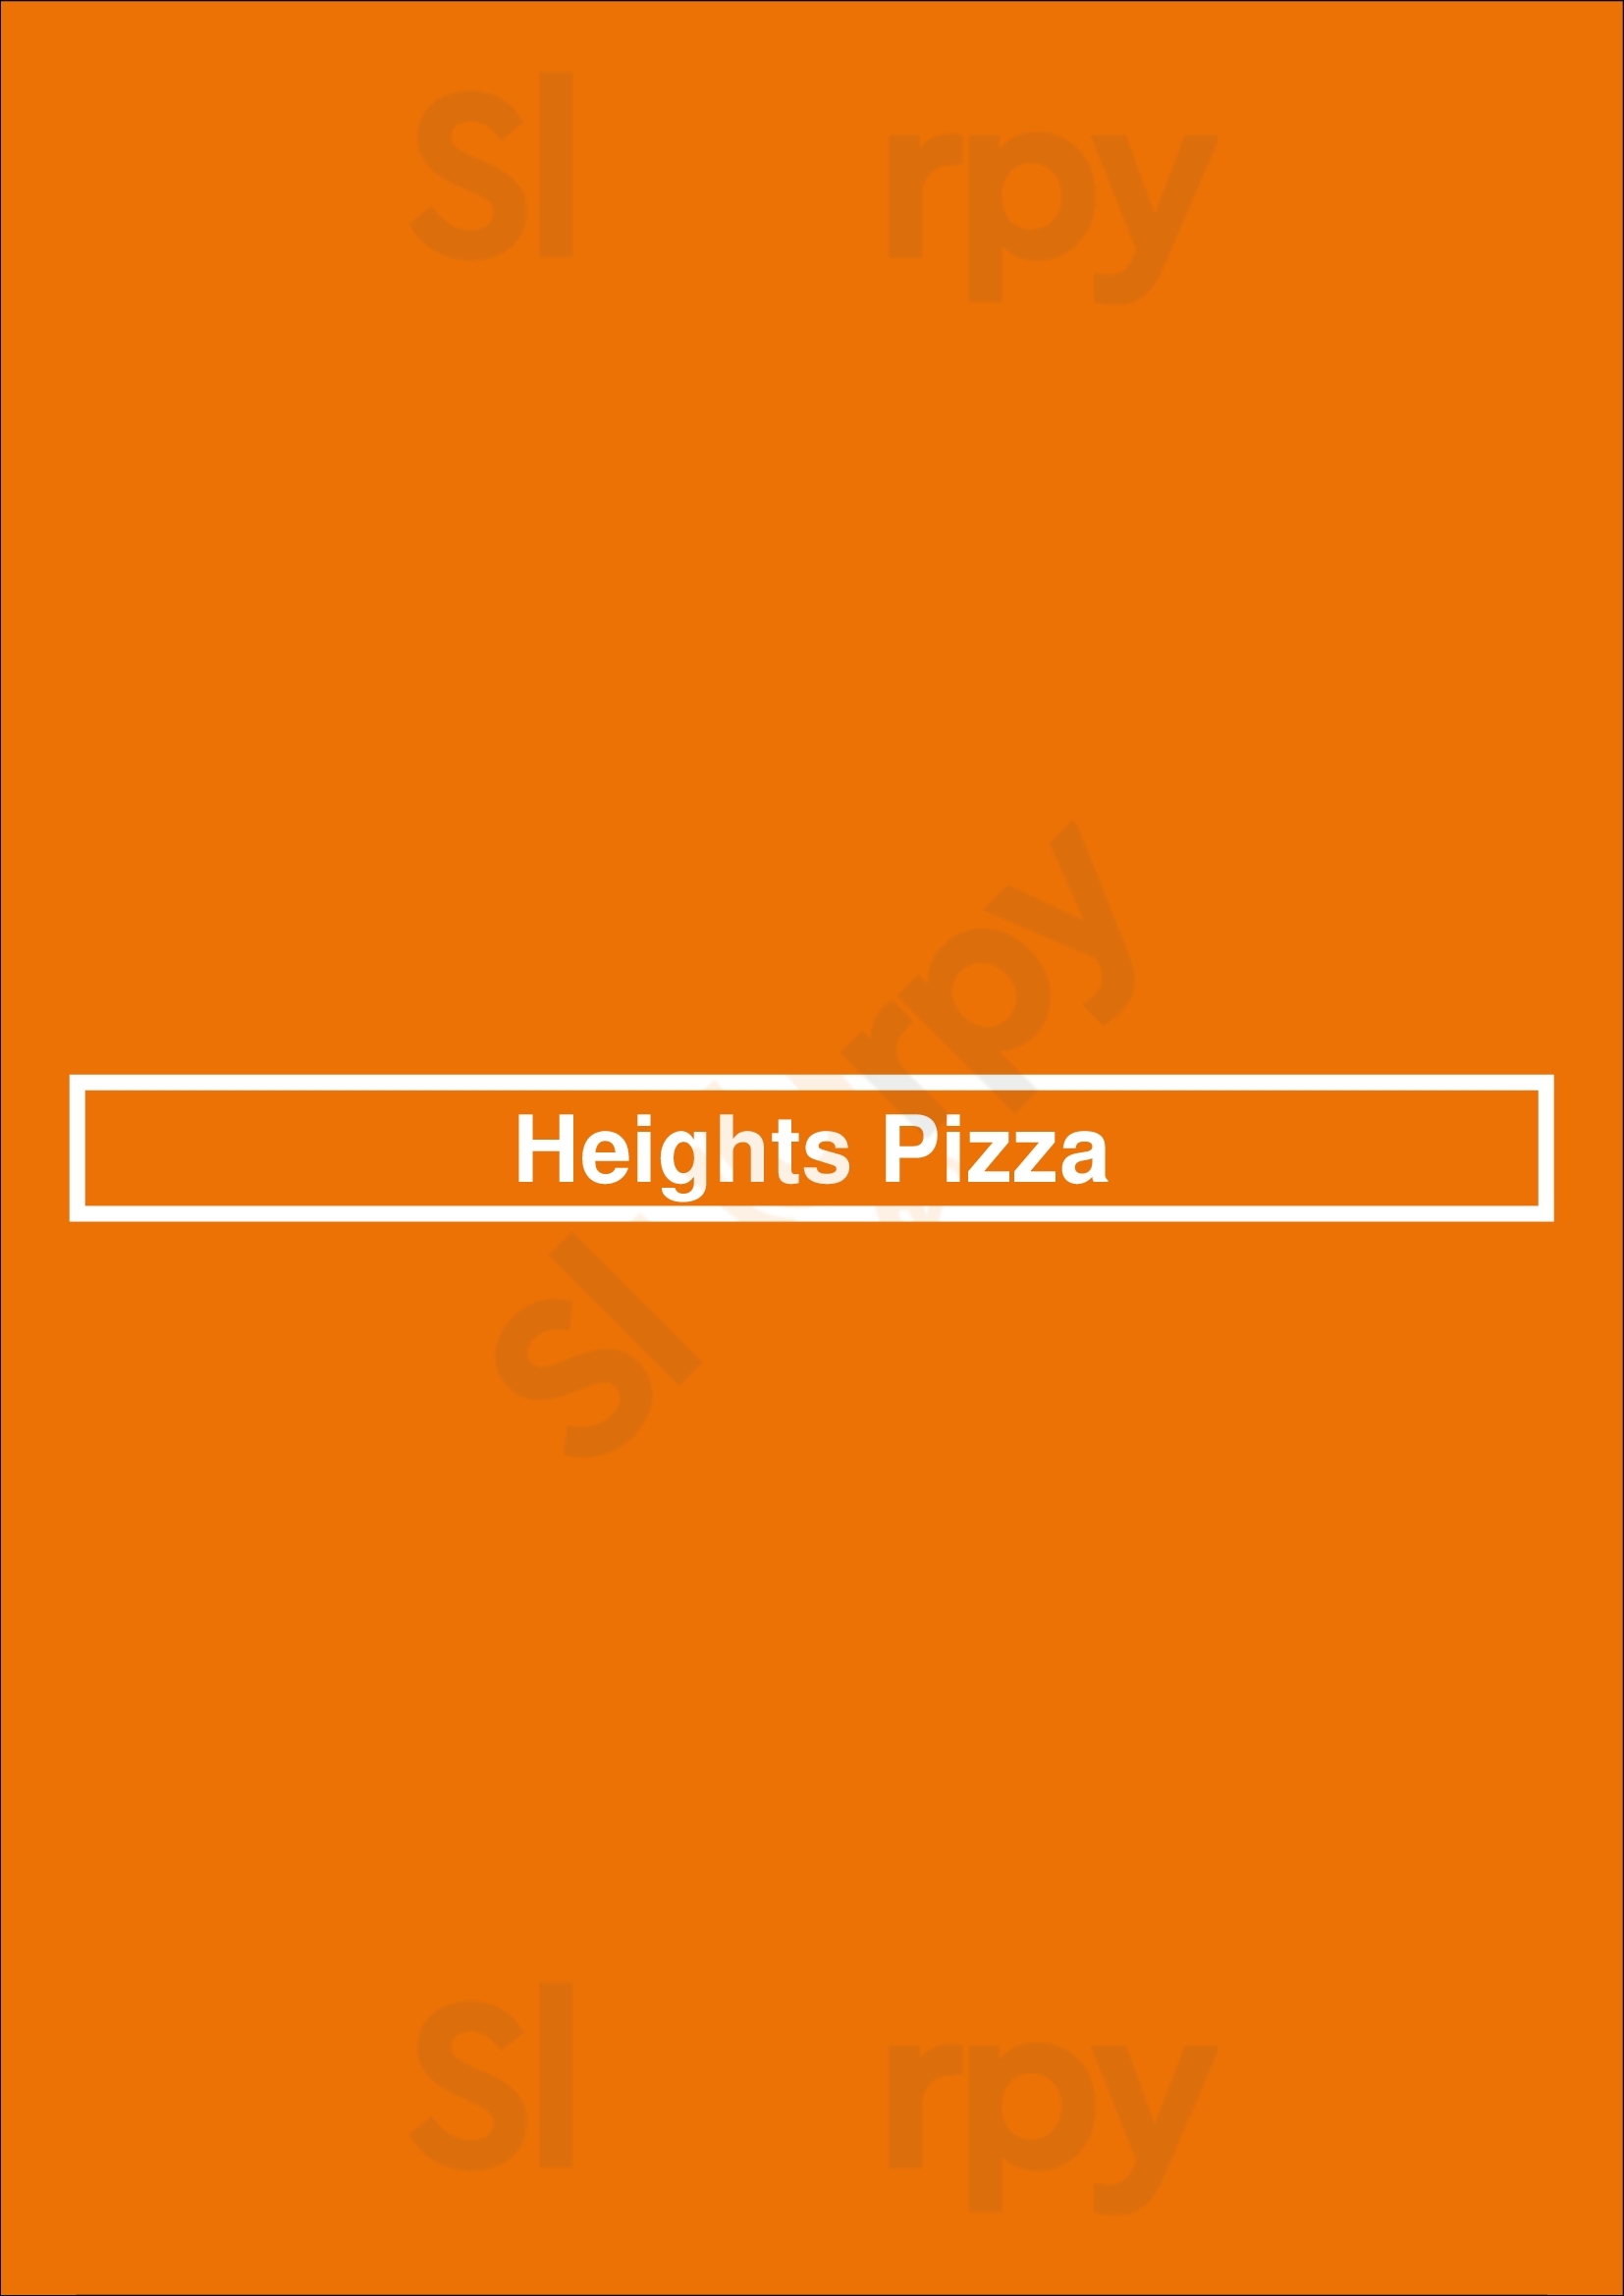 Heights Pizza Tampa Menu - 1